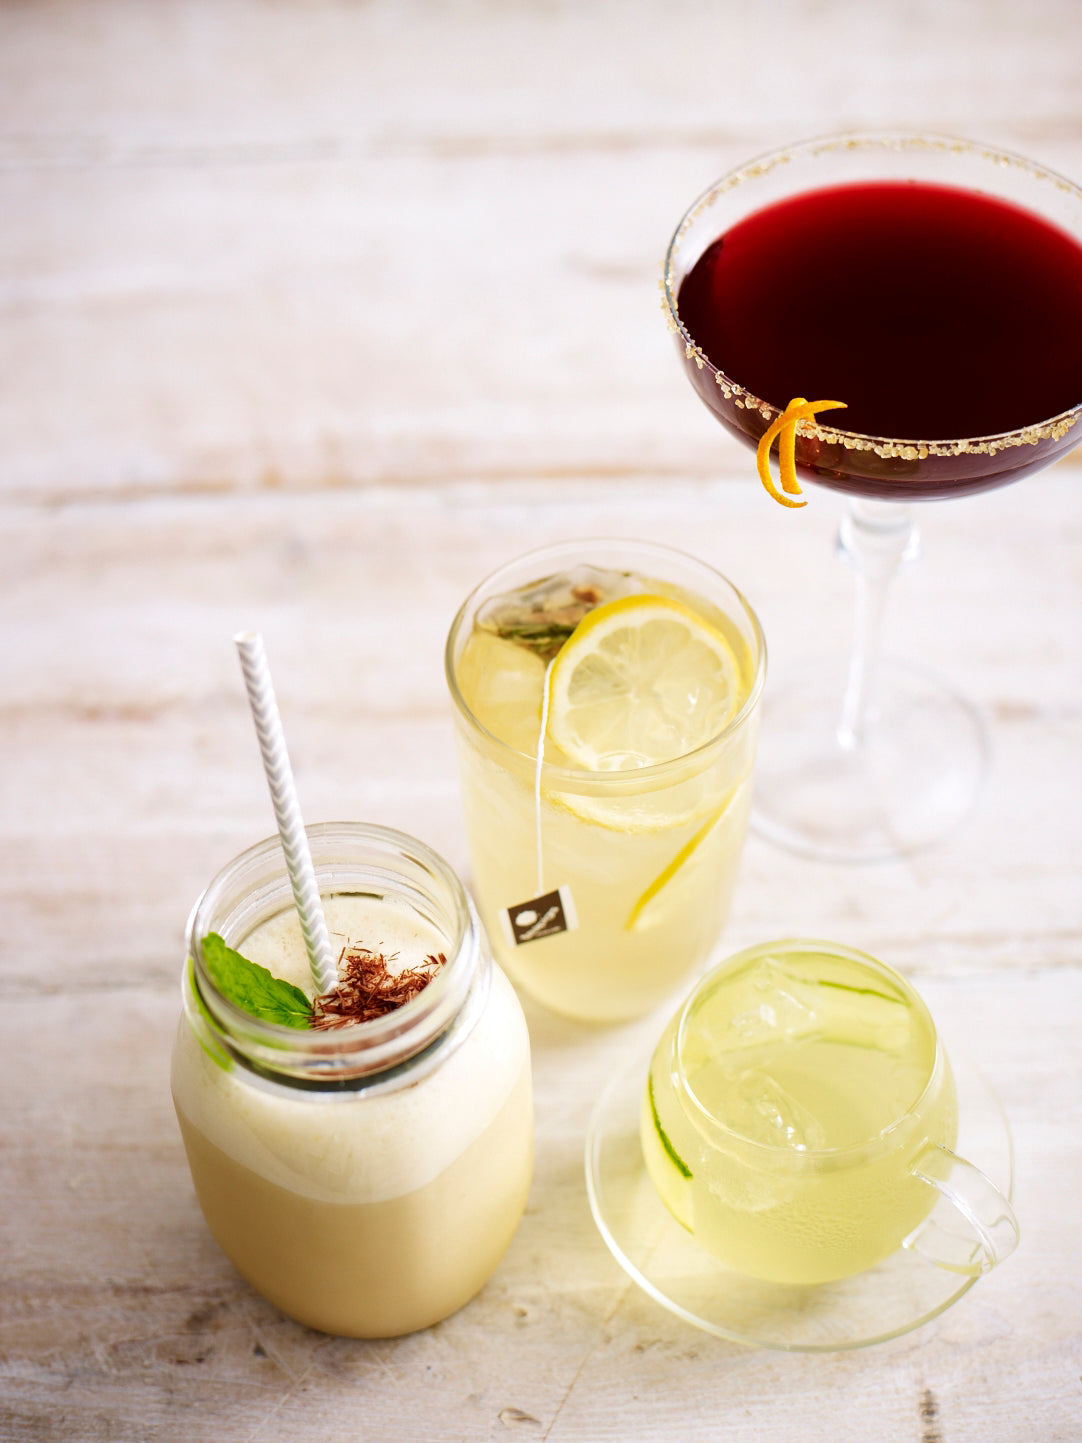 teapigs forskellige drikke tilberedt isshake iste martini 